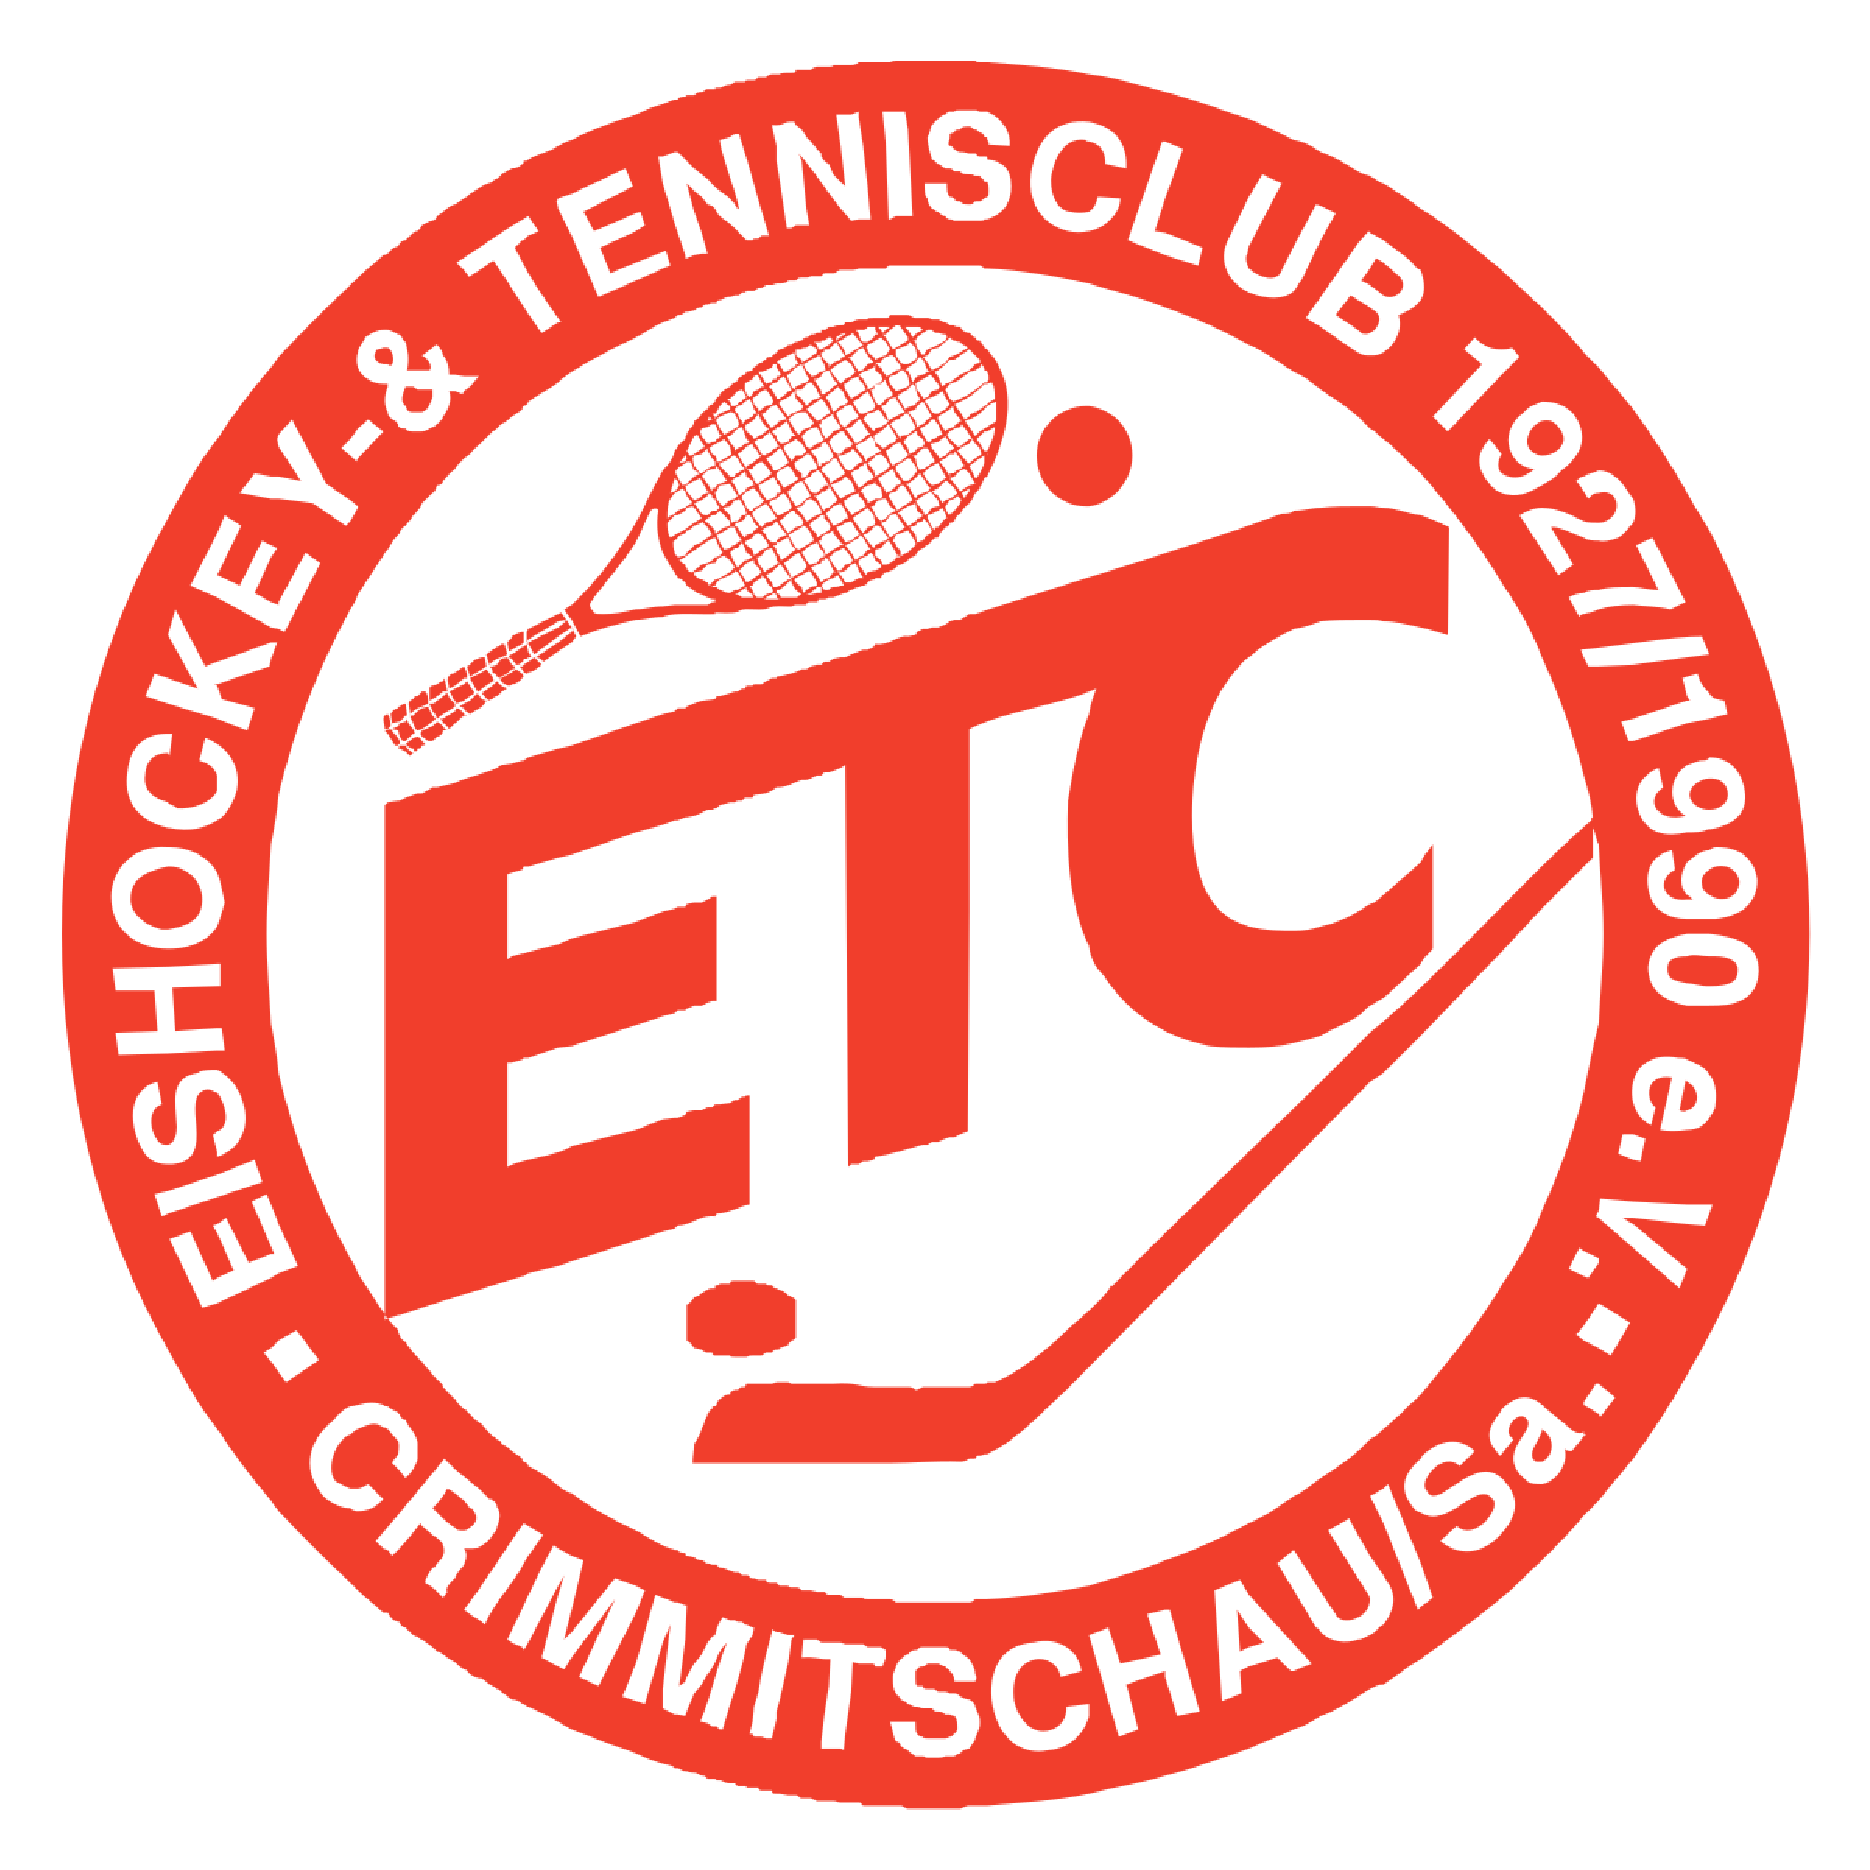 ETC Crimmitschau Logo